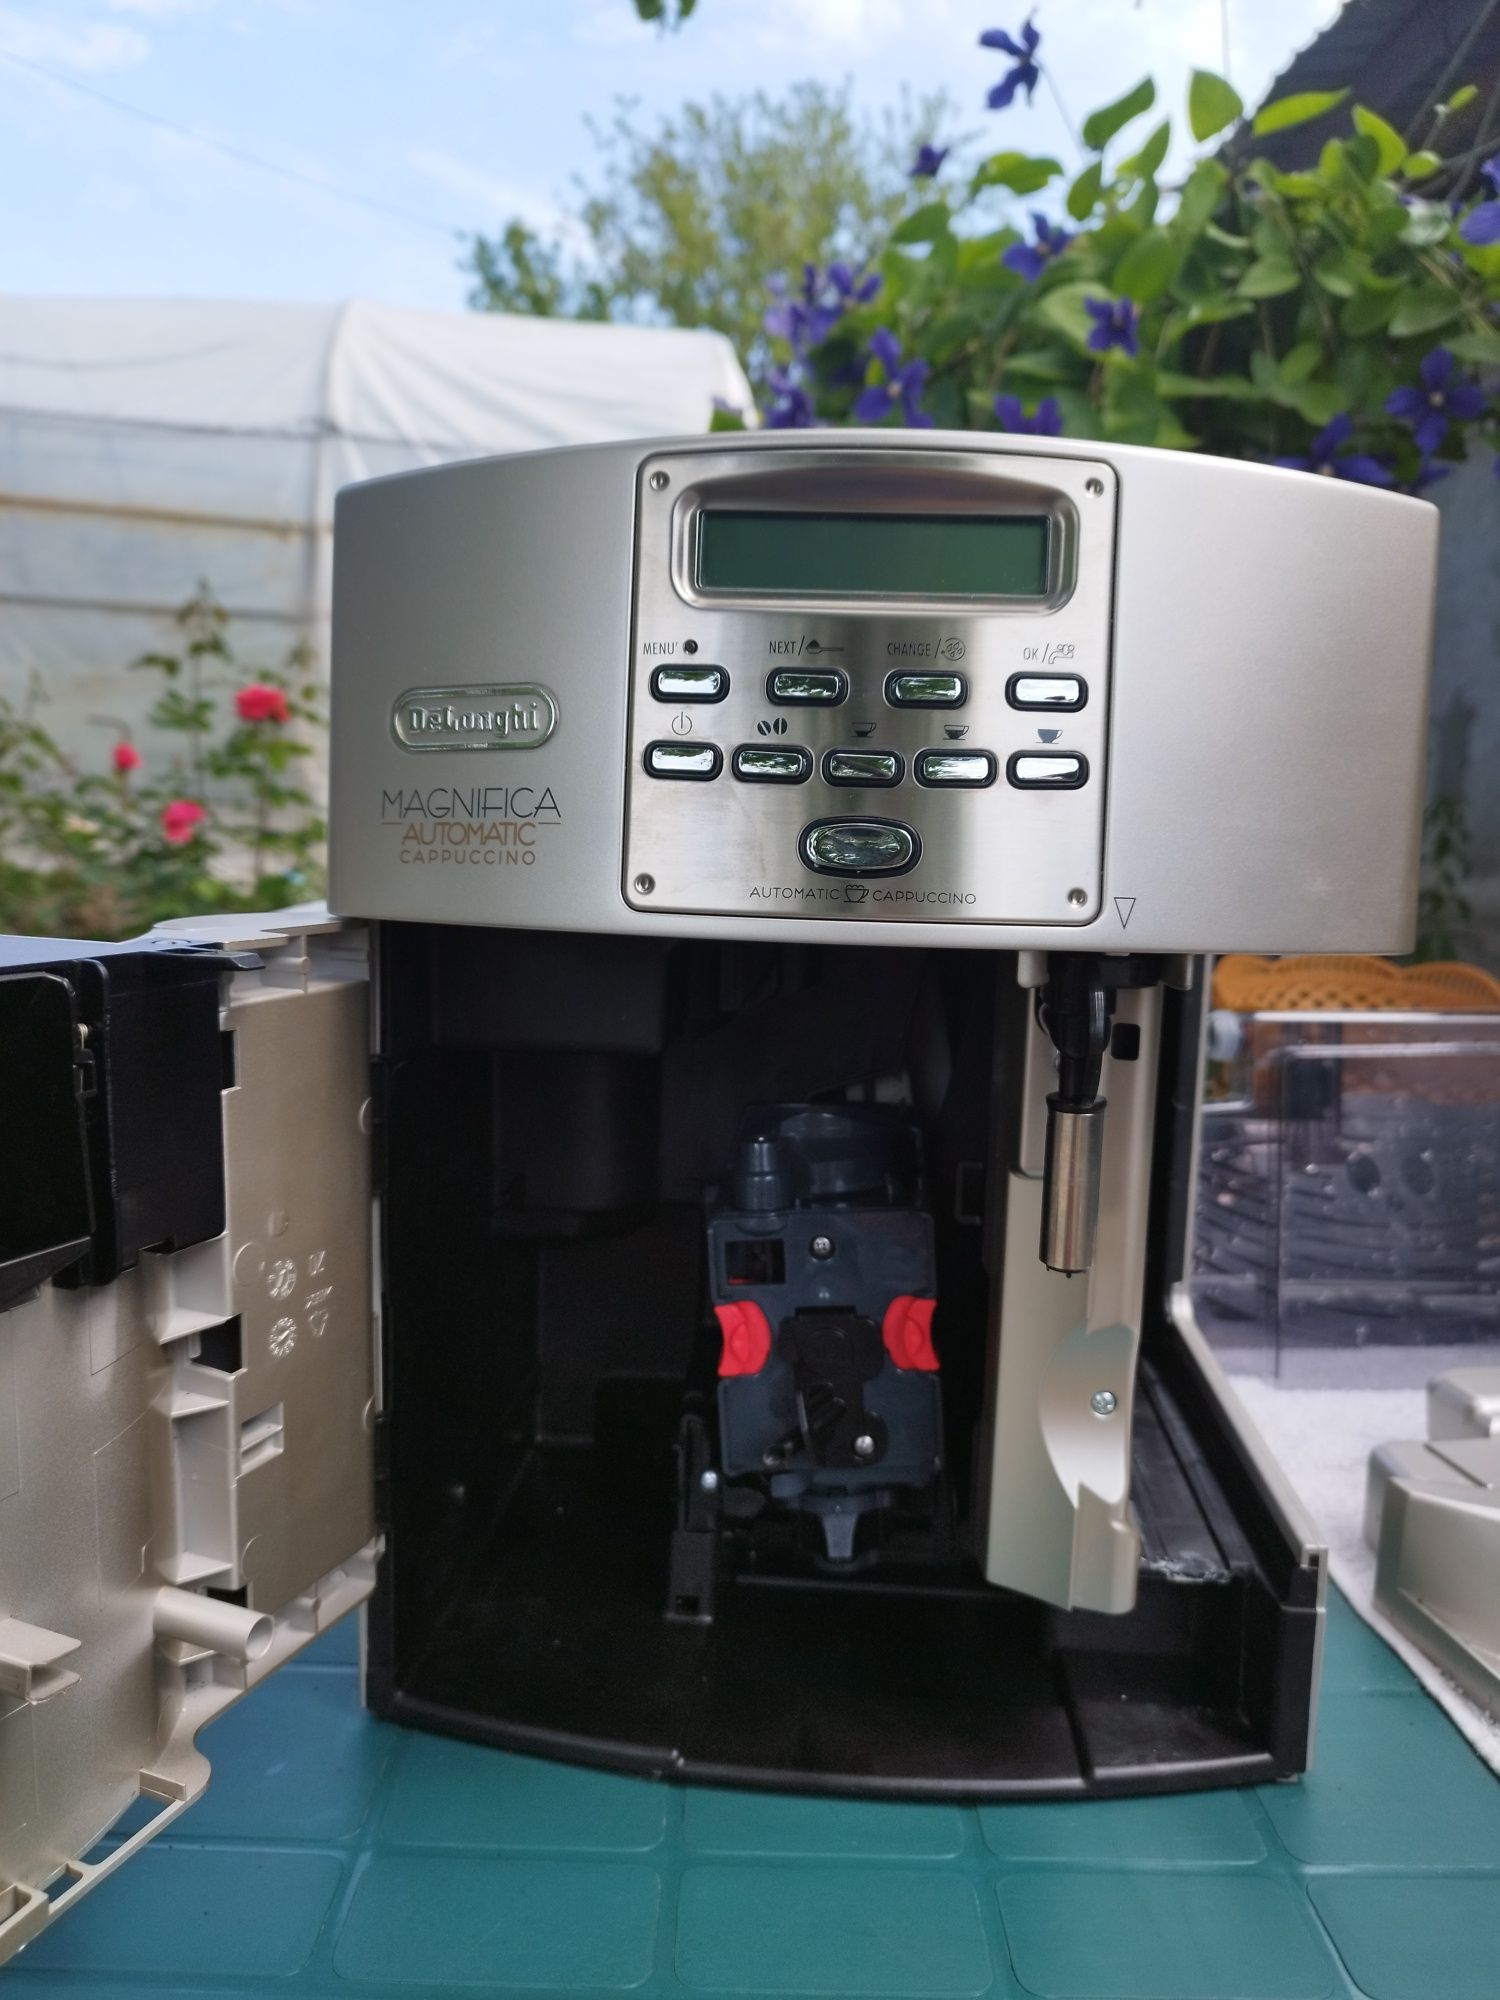 Espressor DeLonghi Magnifica Automatic Cappuccino